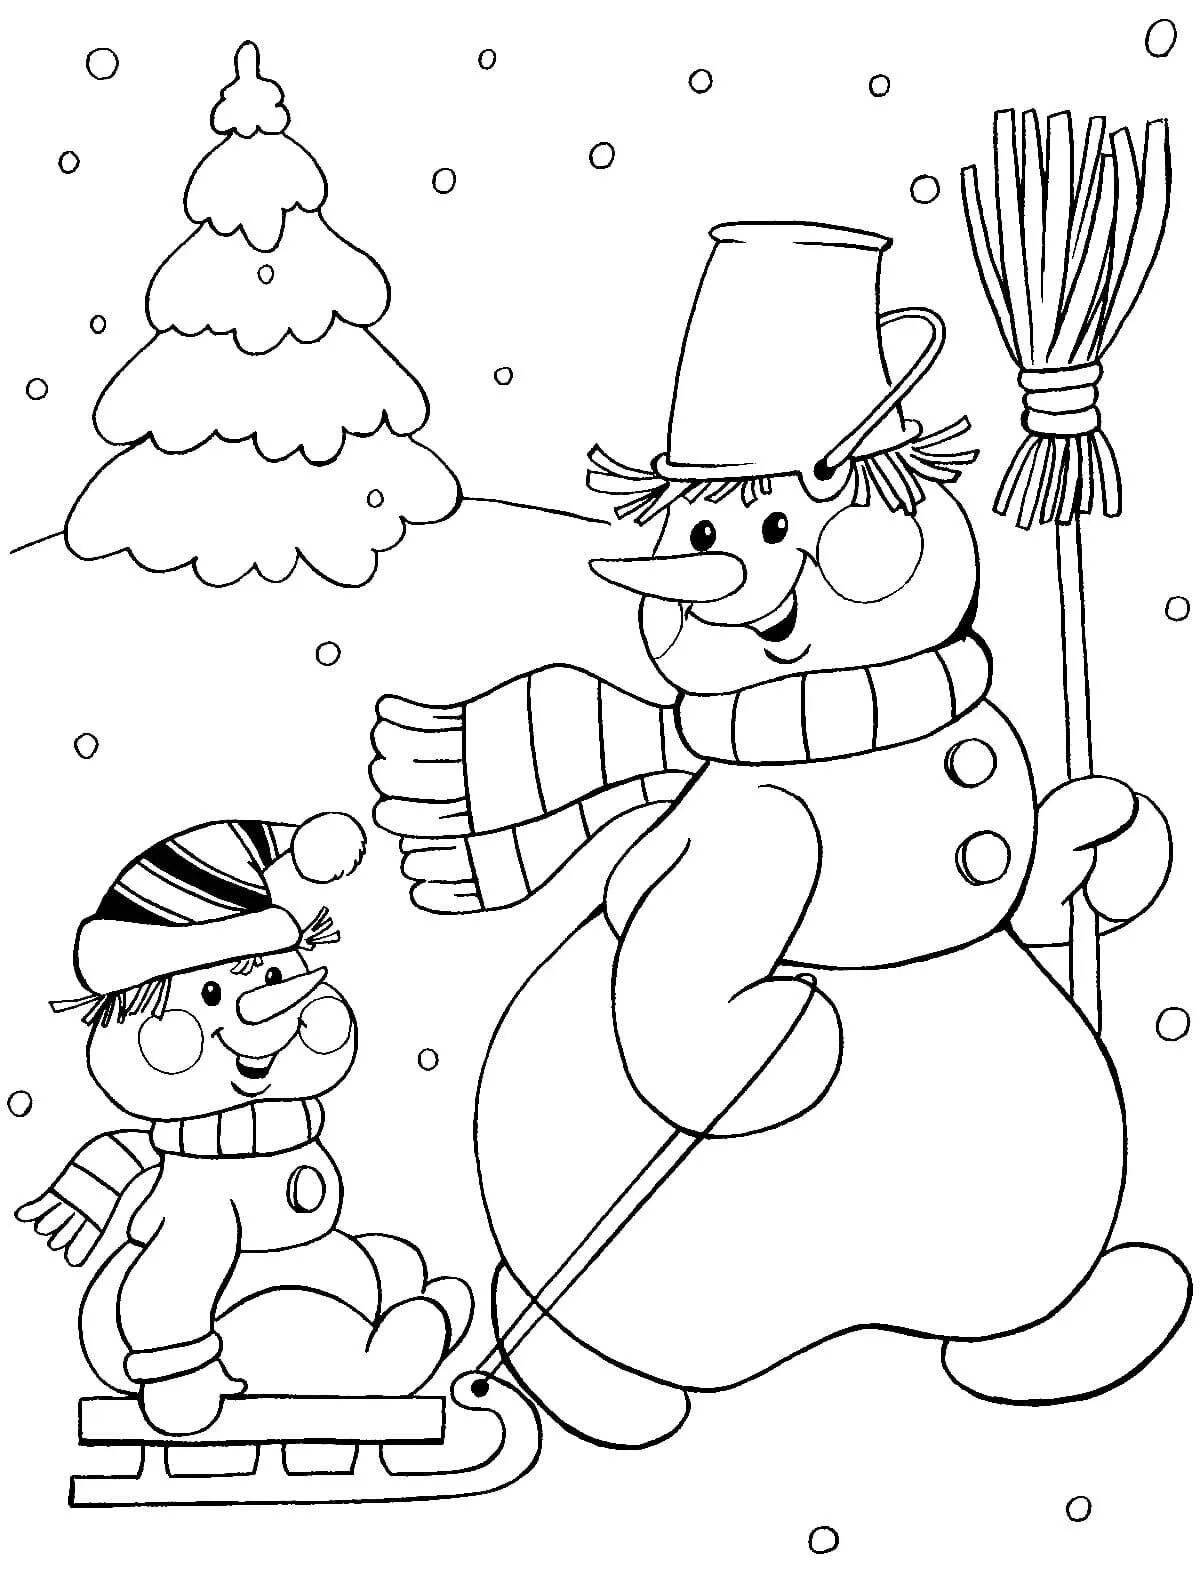 Coloring page joyful snowman birthday